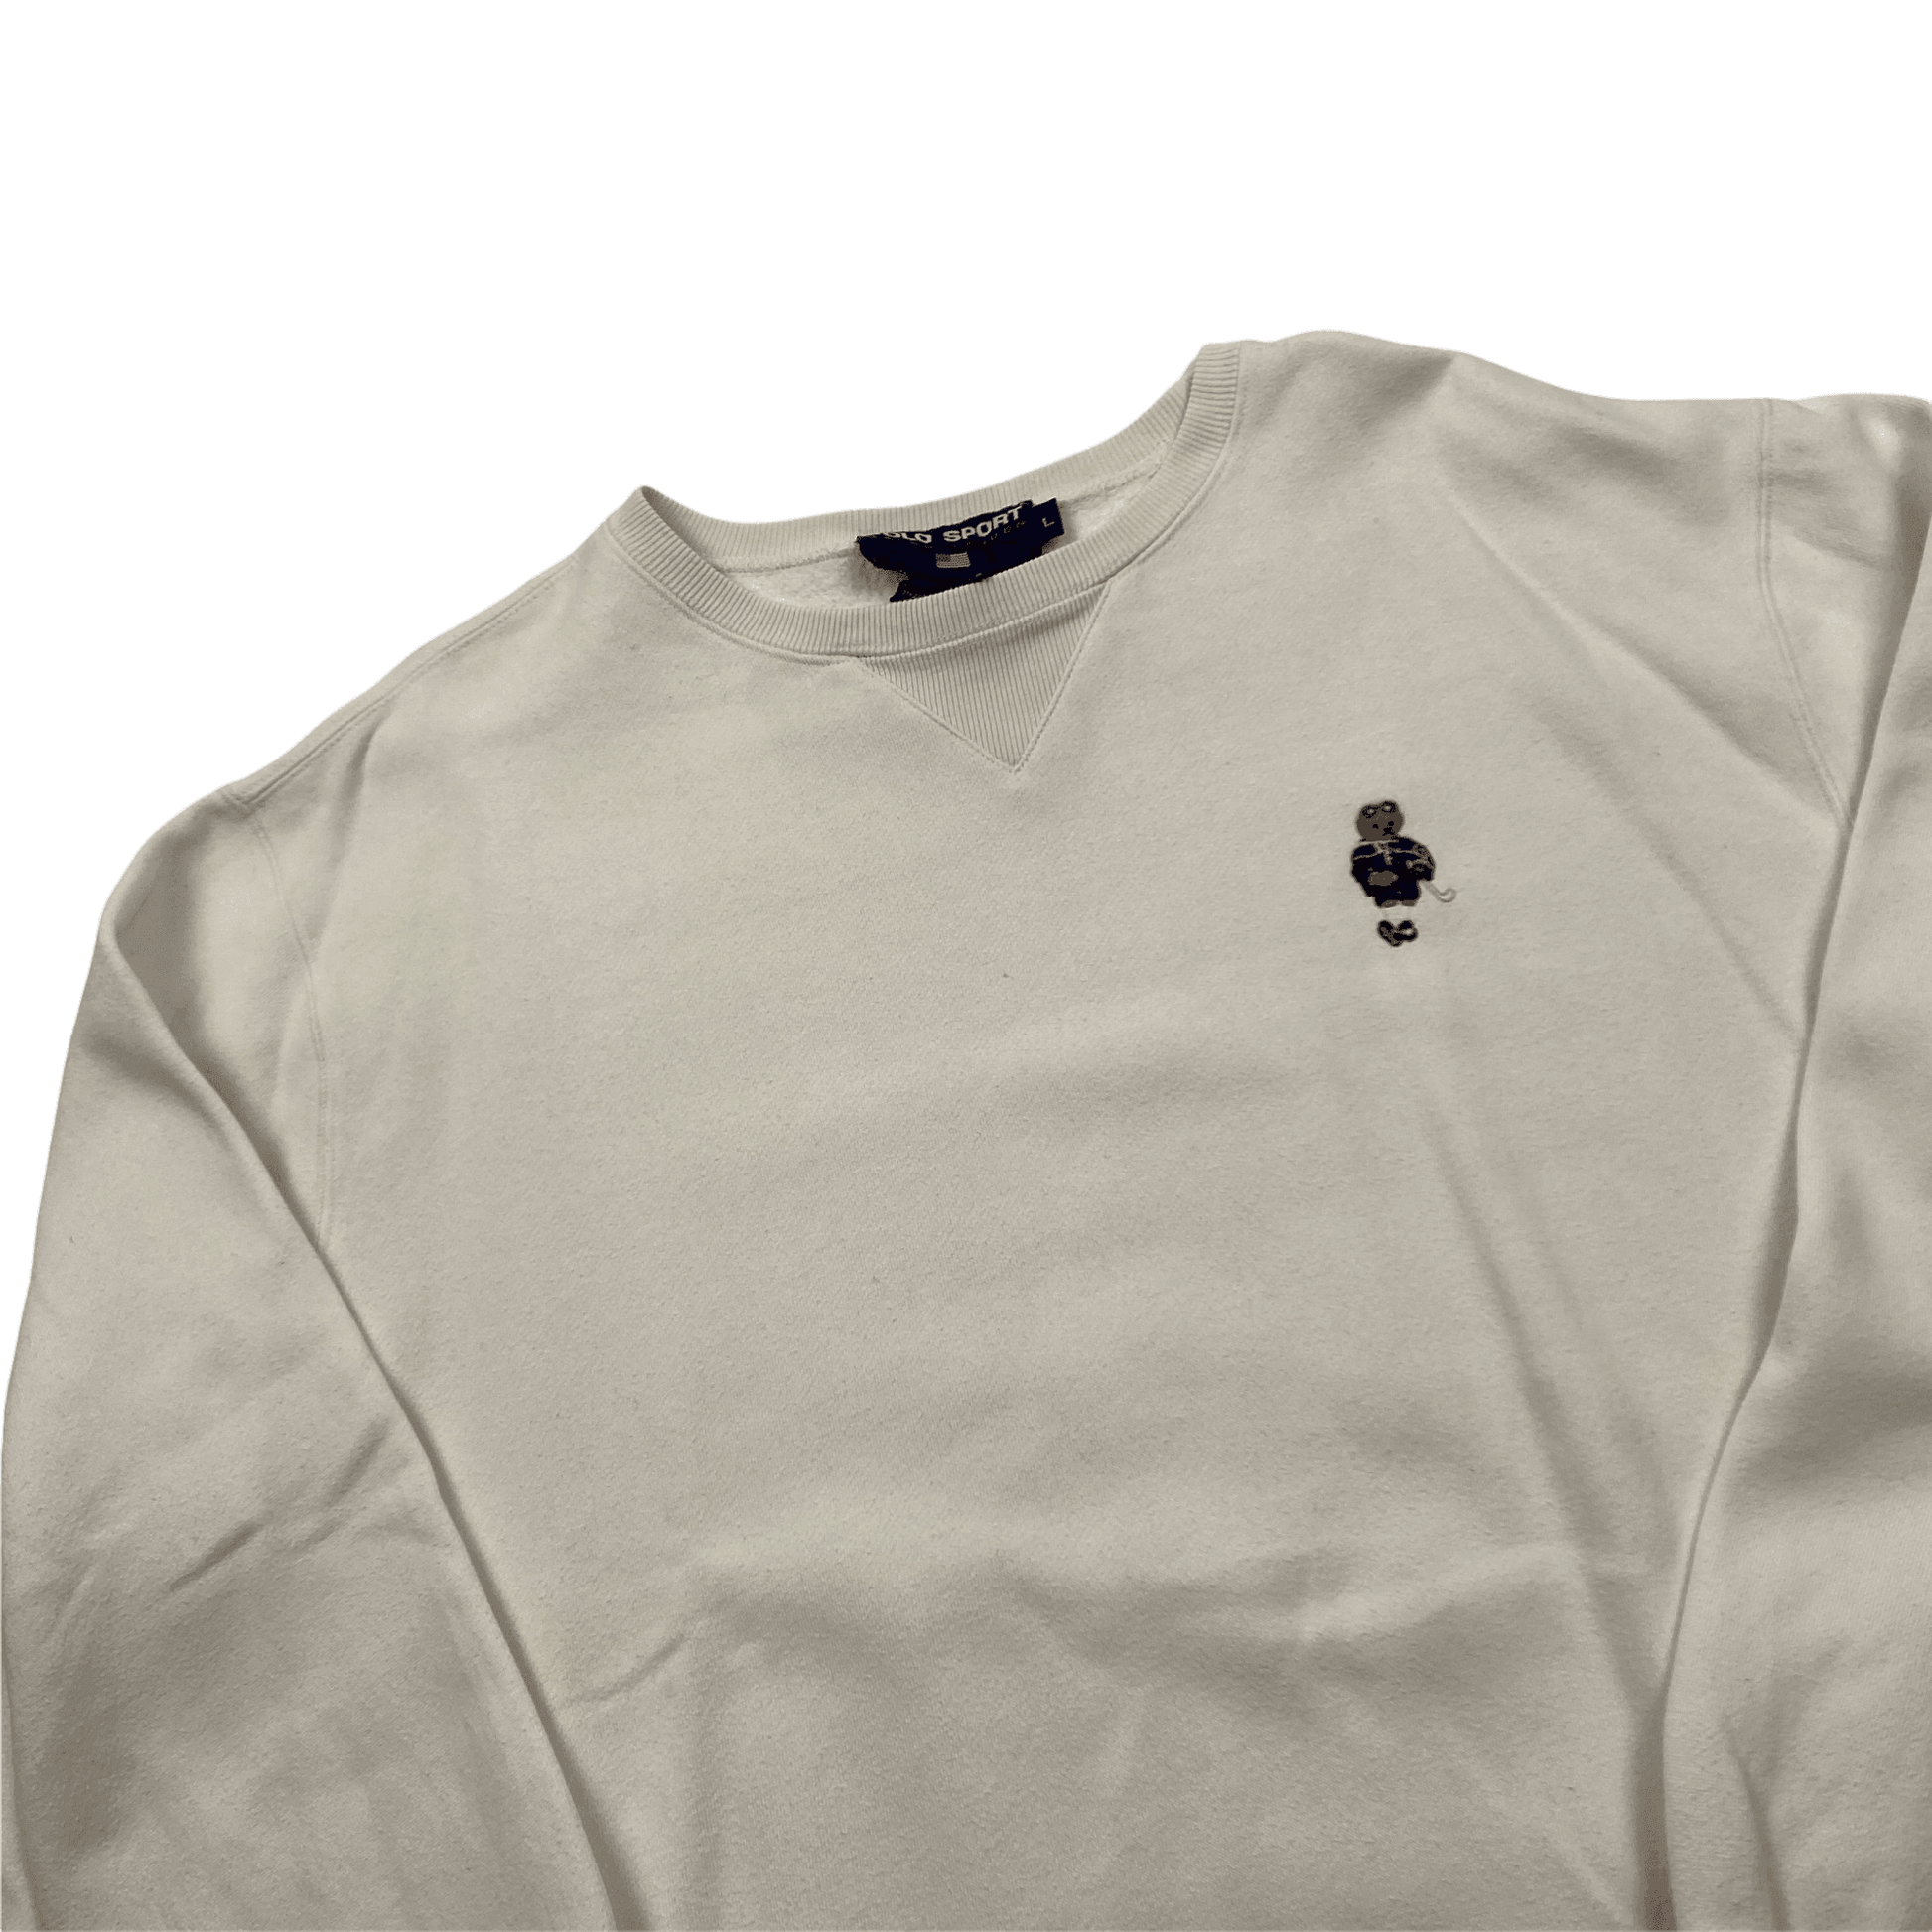 Vintage 90s White Ralph Lauren Polo Sport Bear Sweatshirt - Large - The Streetwear Studio